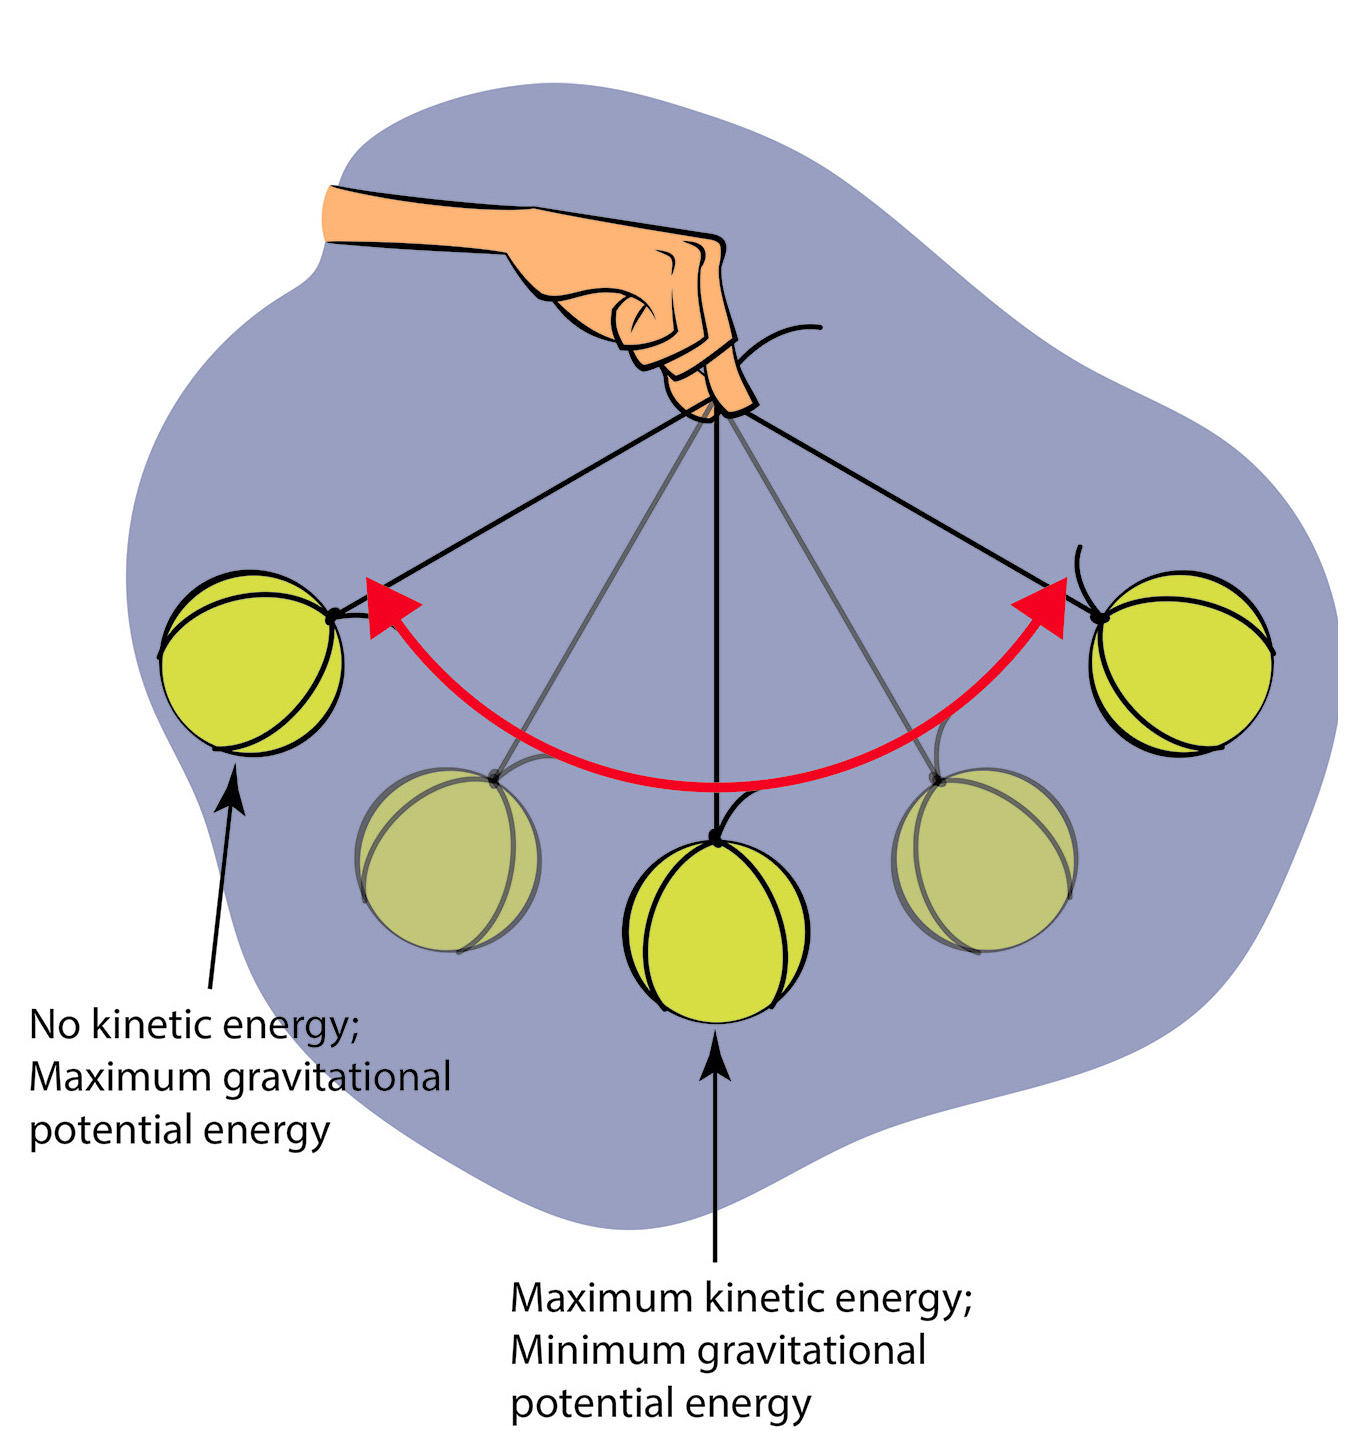 kinetic vs. potential energy